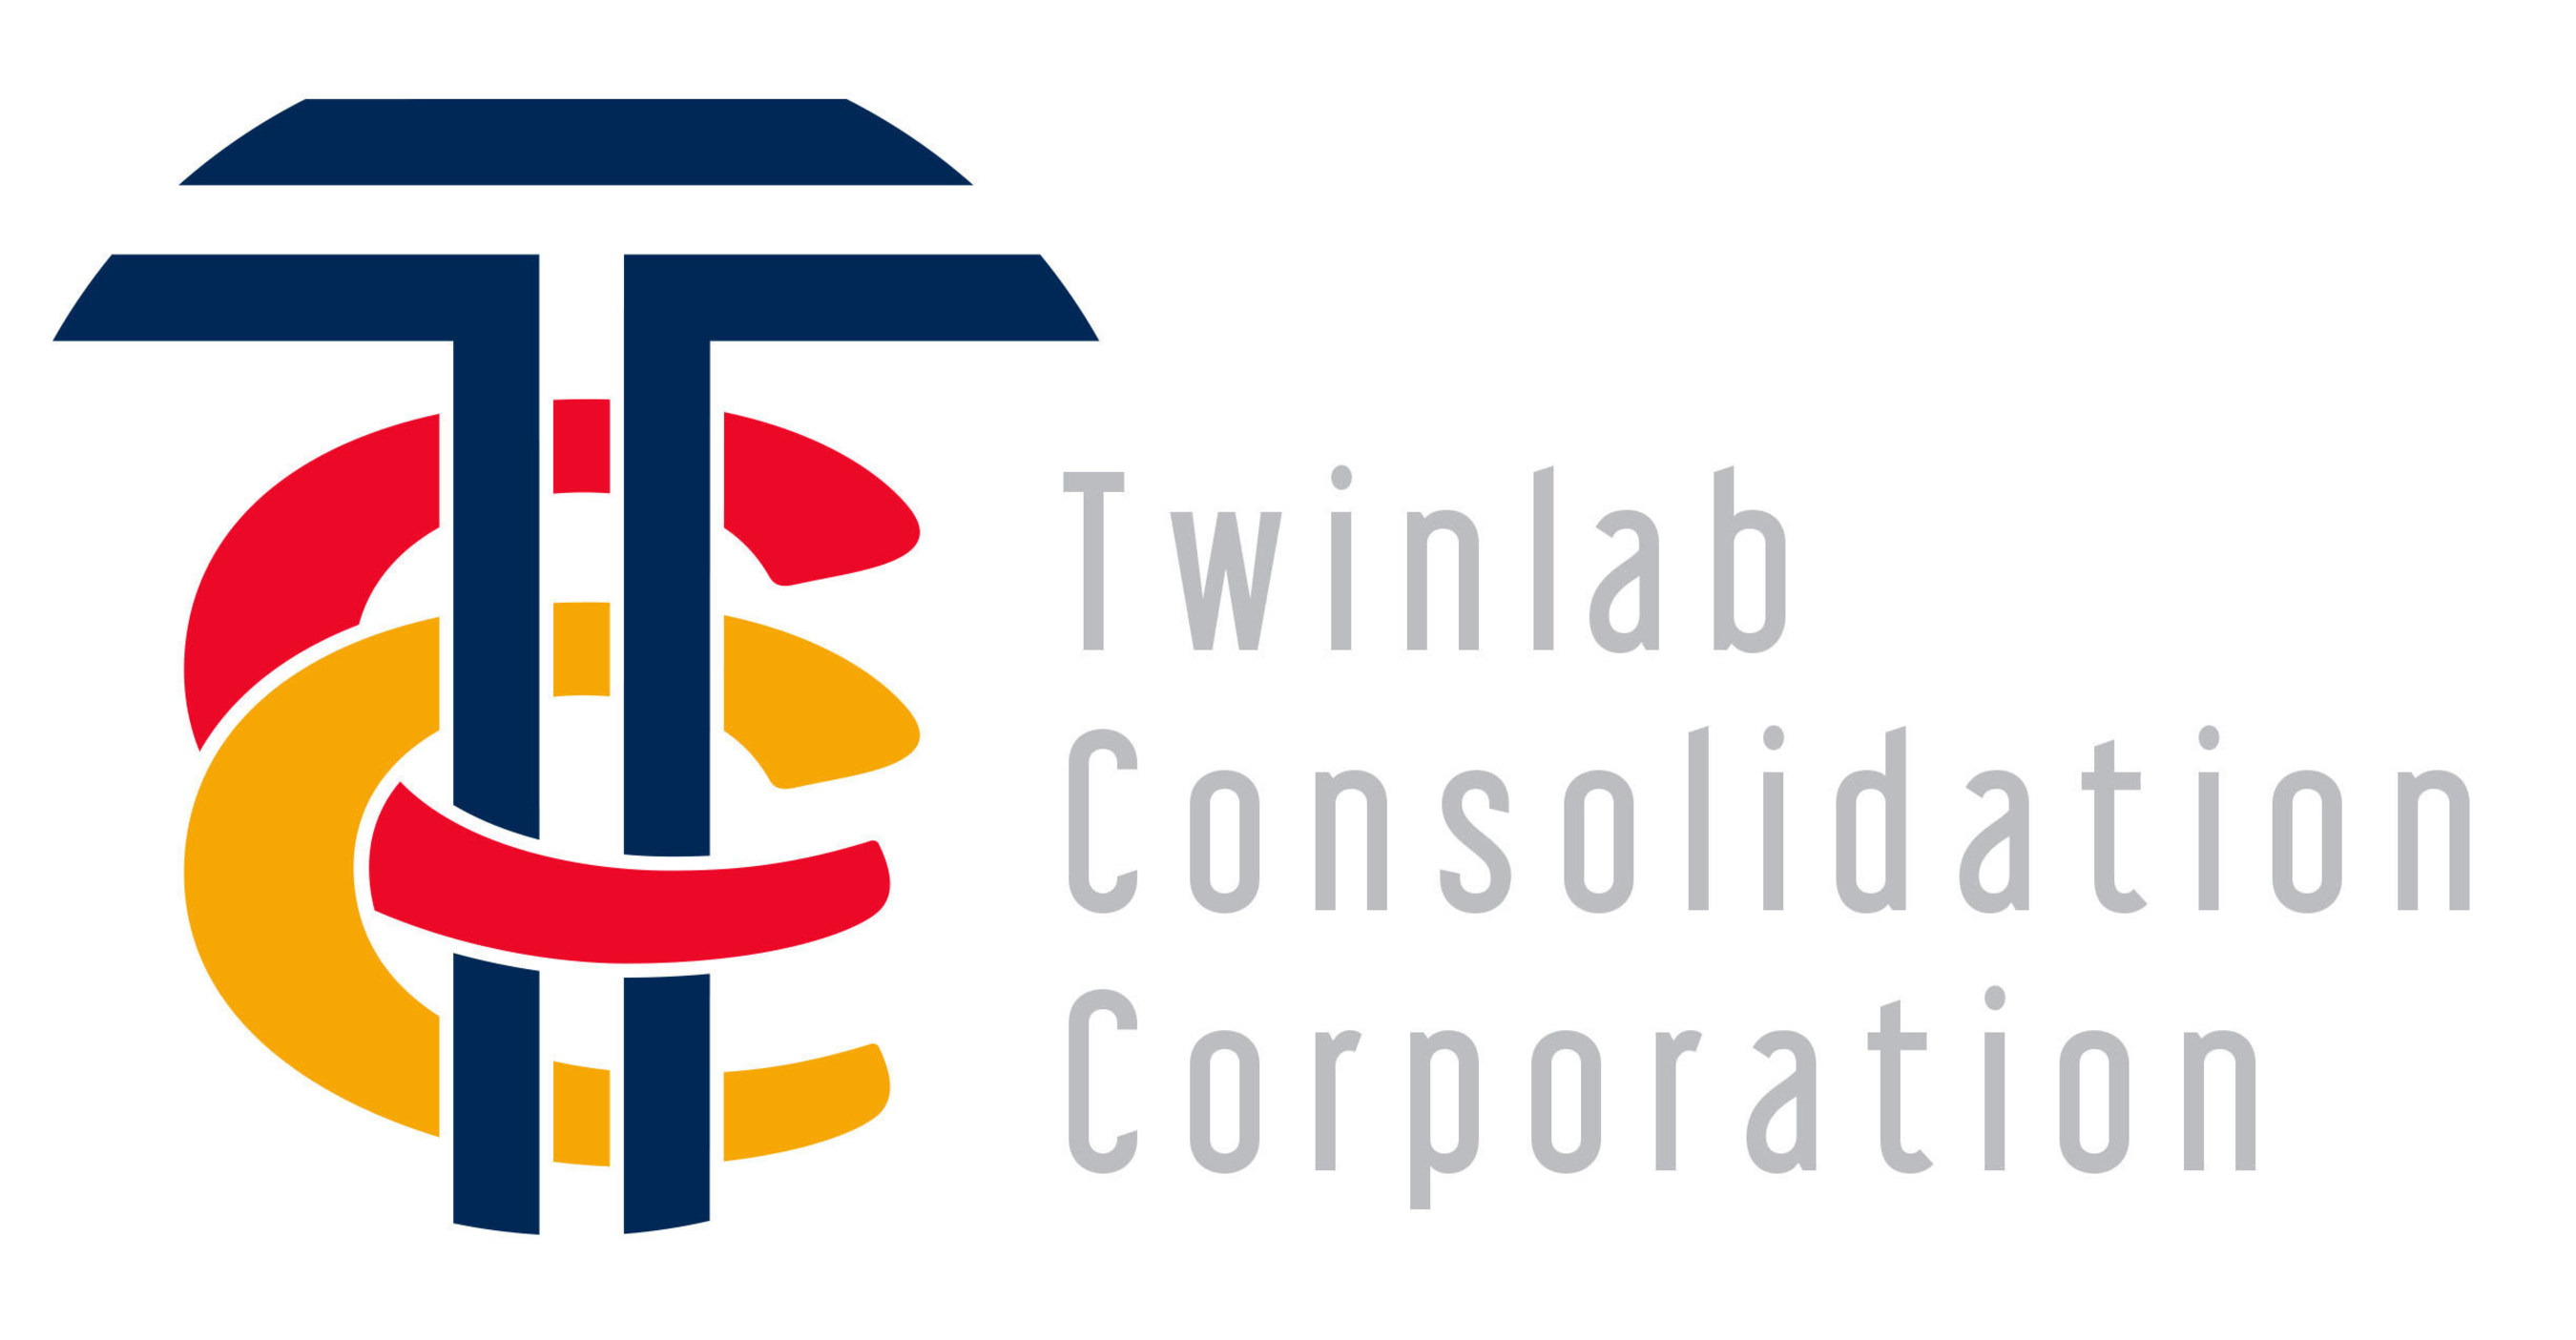 Twinlab Consolidation Corporation